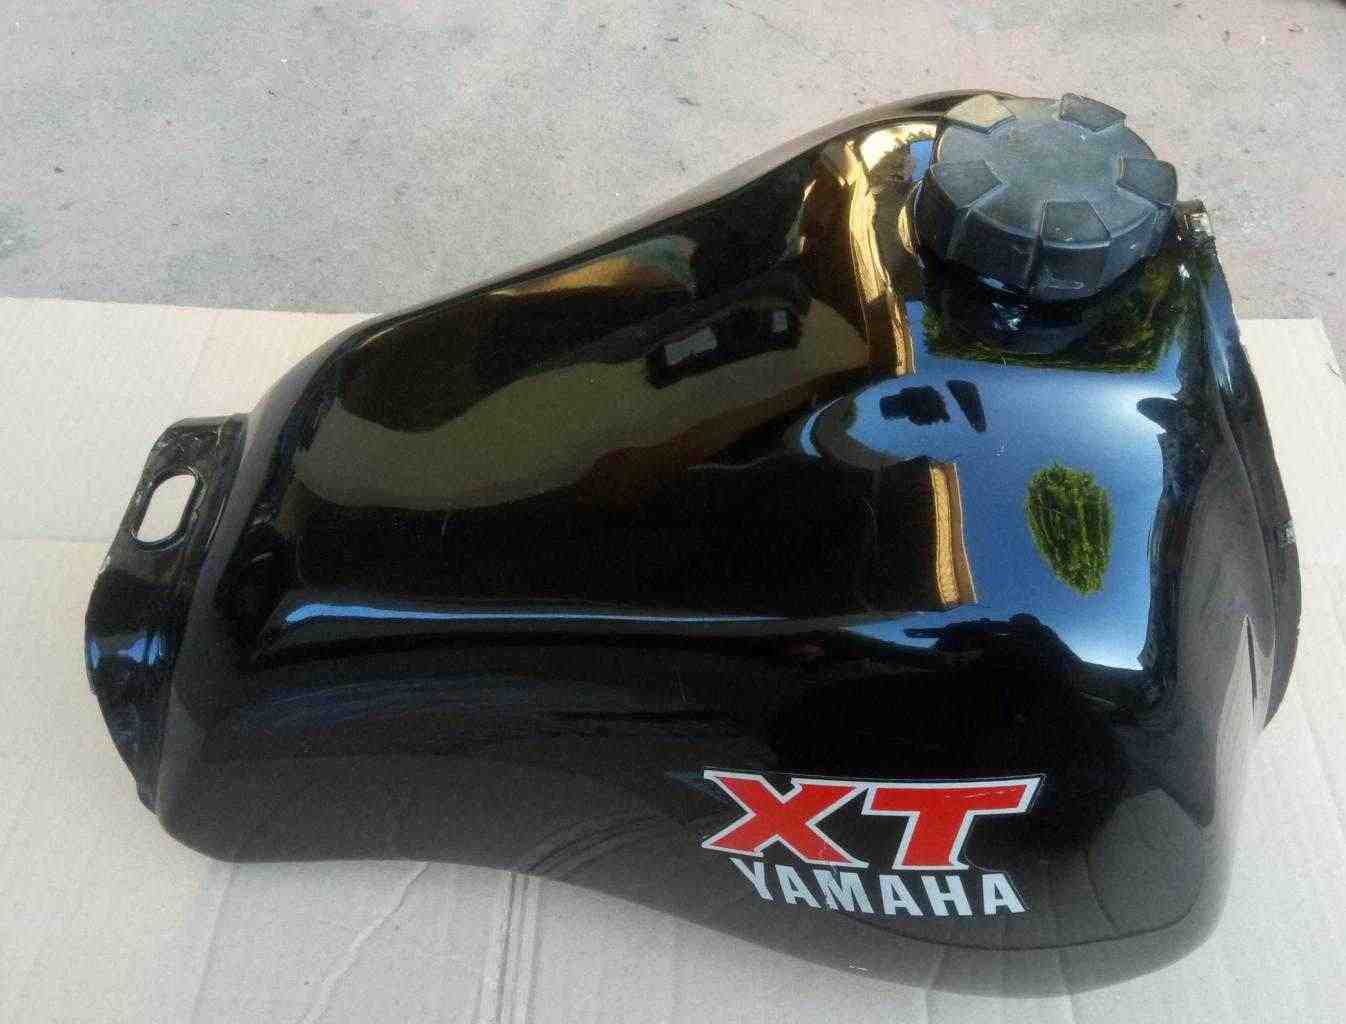 Serbatoio benzina Yamaha XT 550